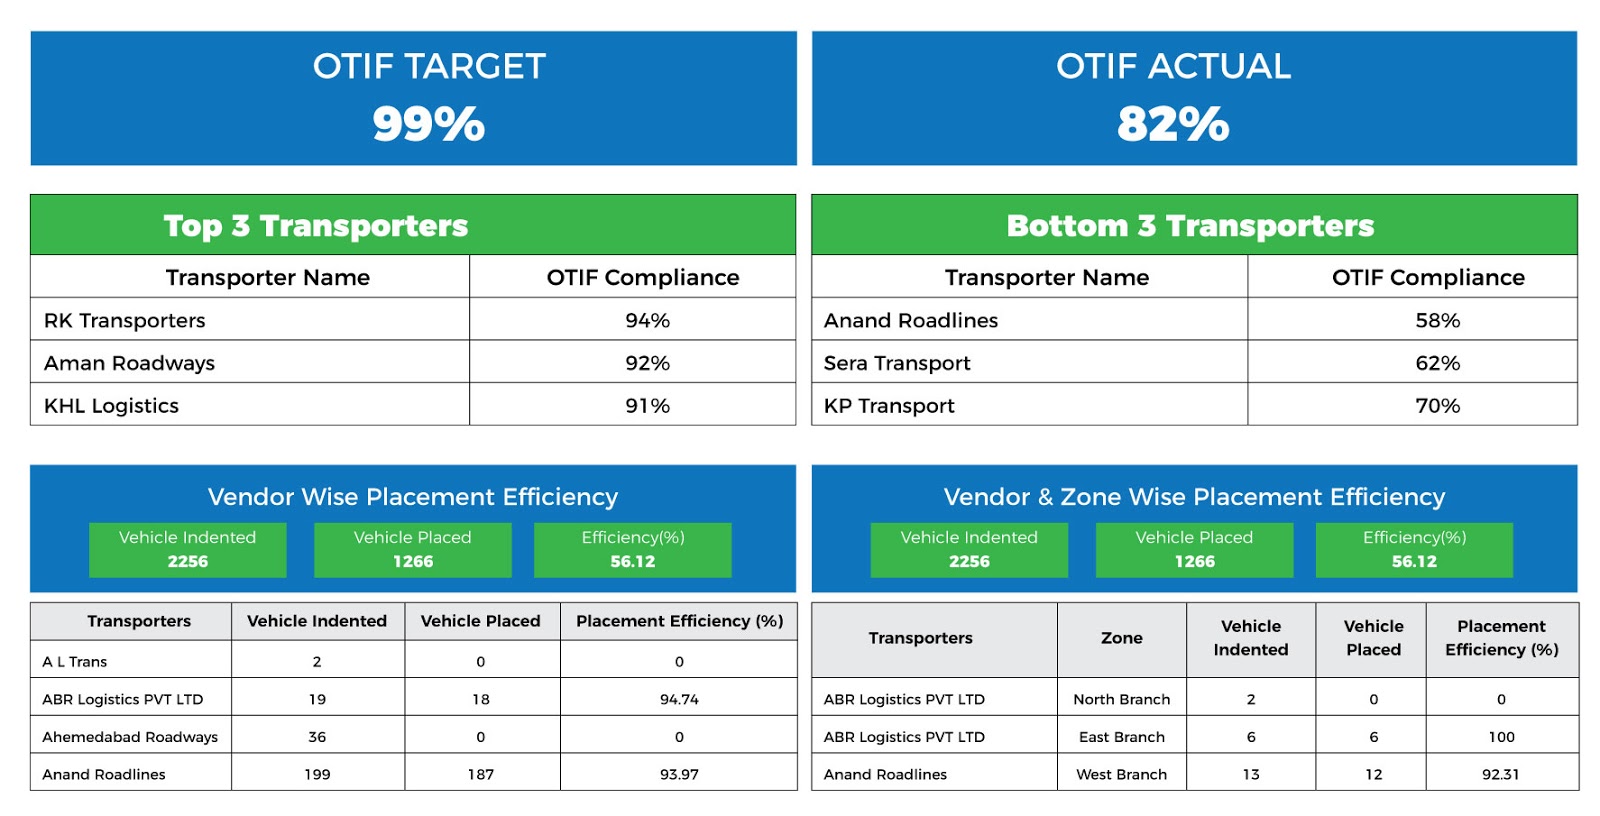 Dashboard to monitor OTIF target vs actual score